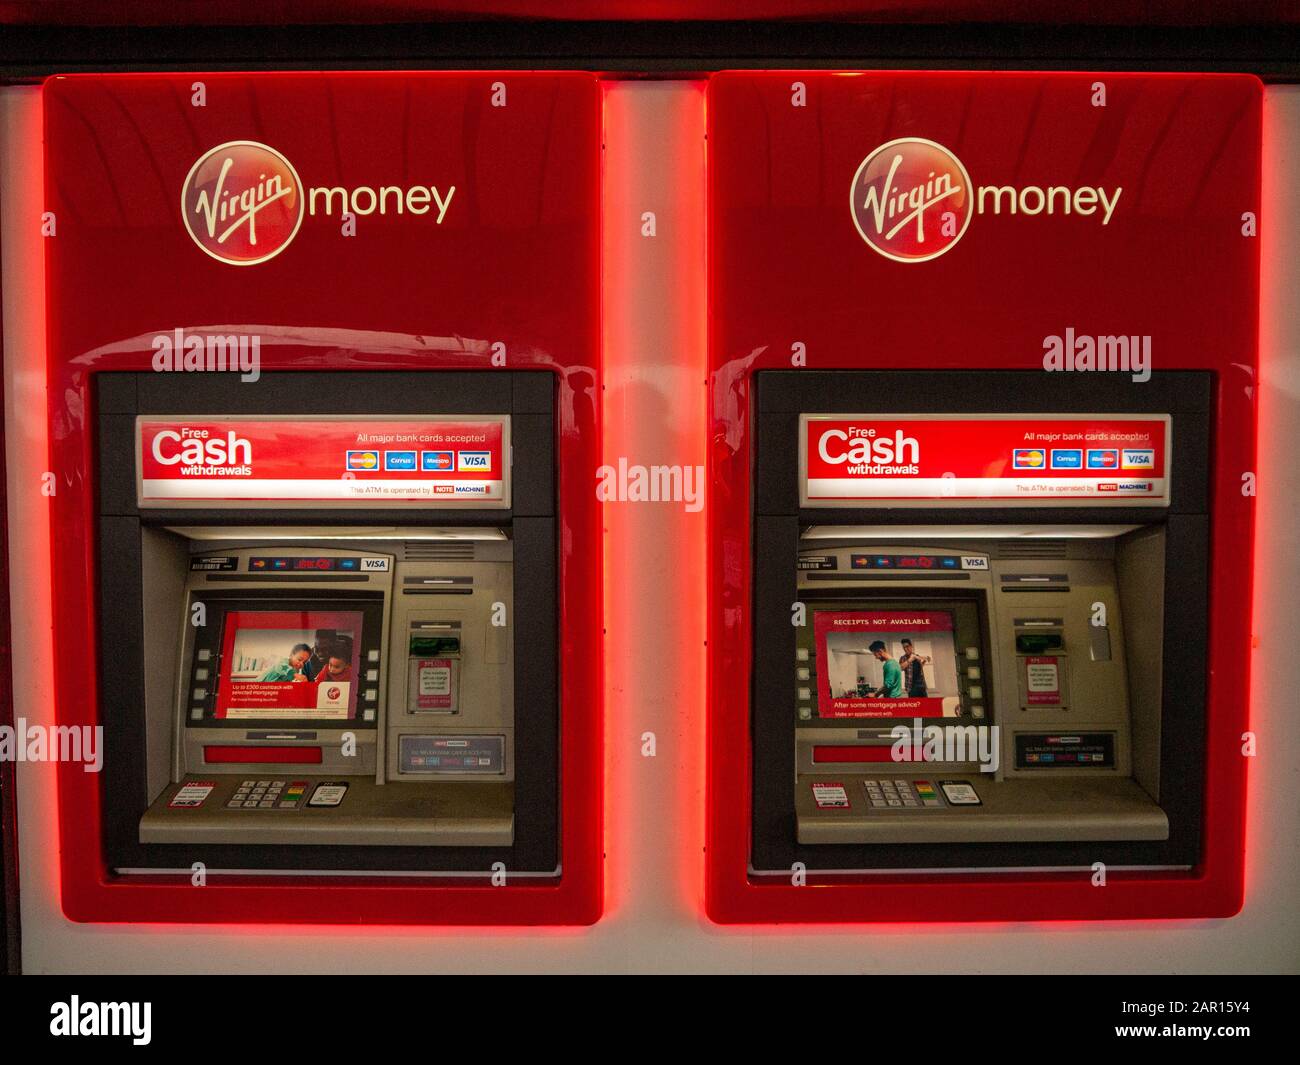 Two Virgin money ATM cash machines UK Stock Photo